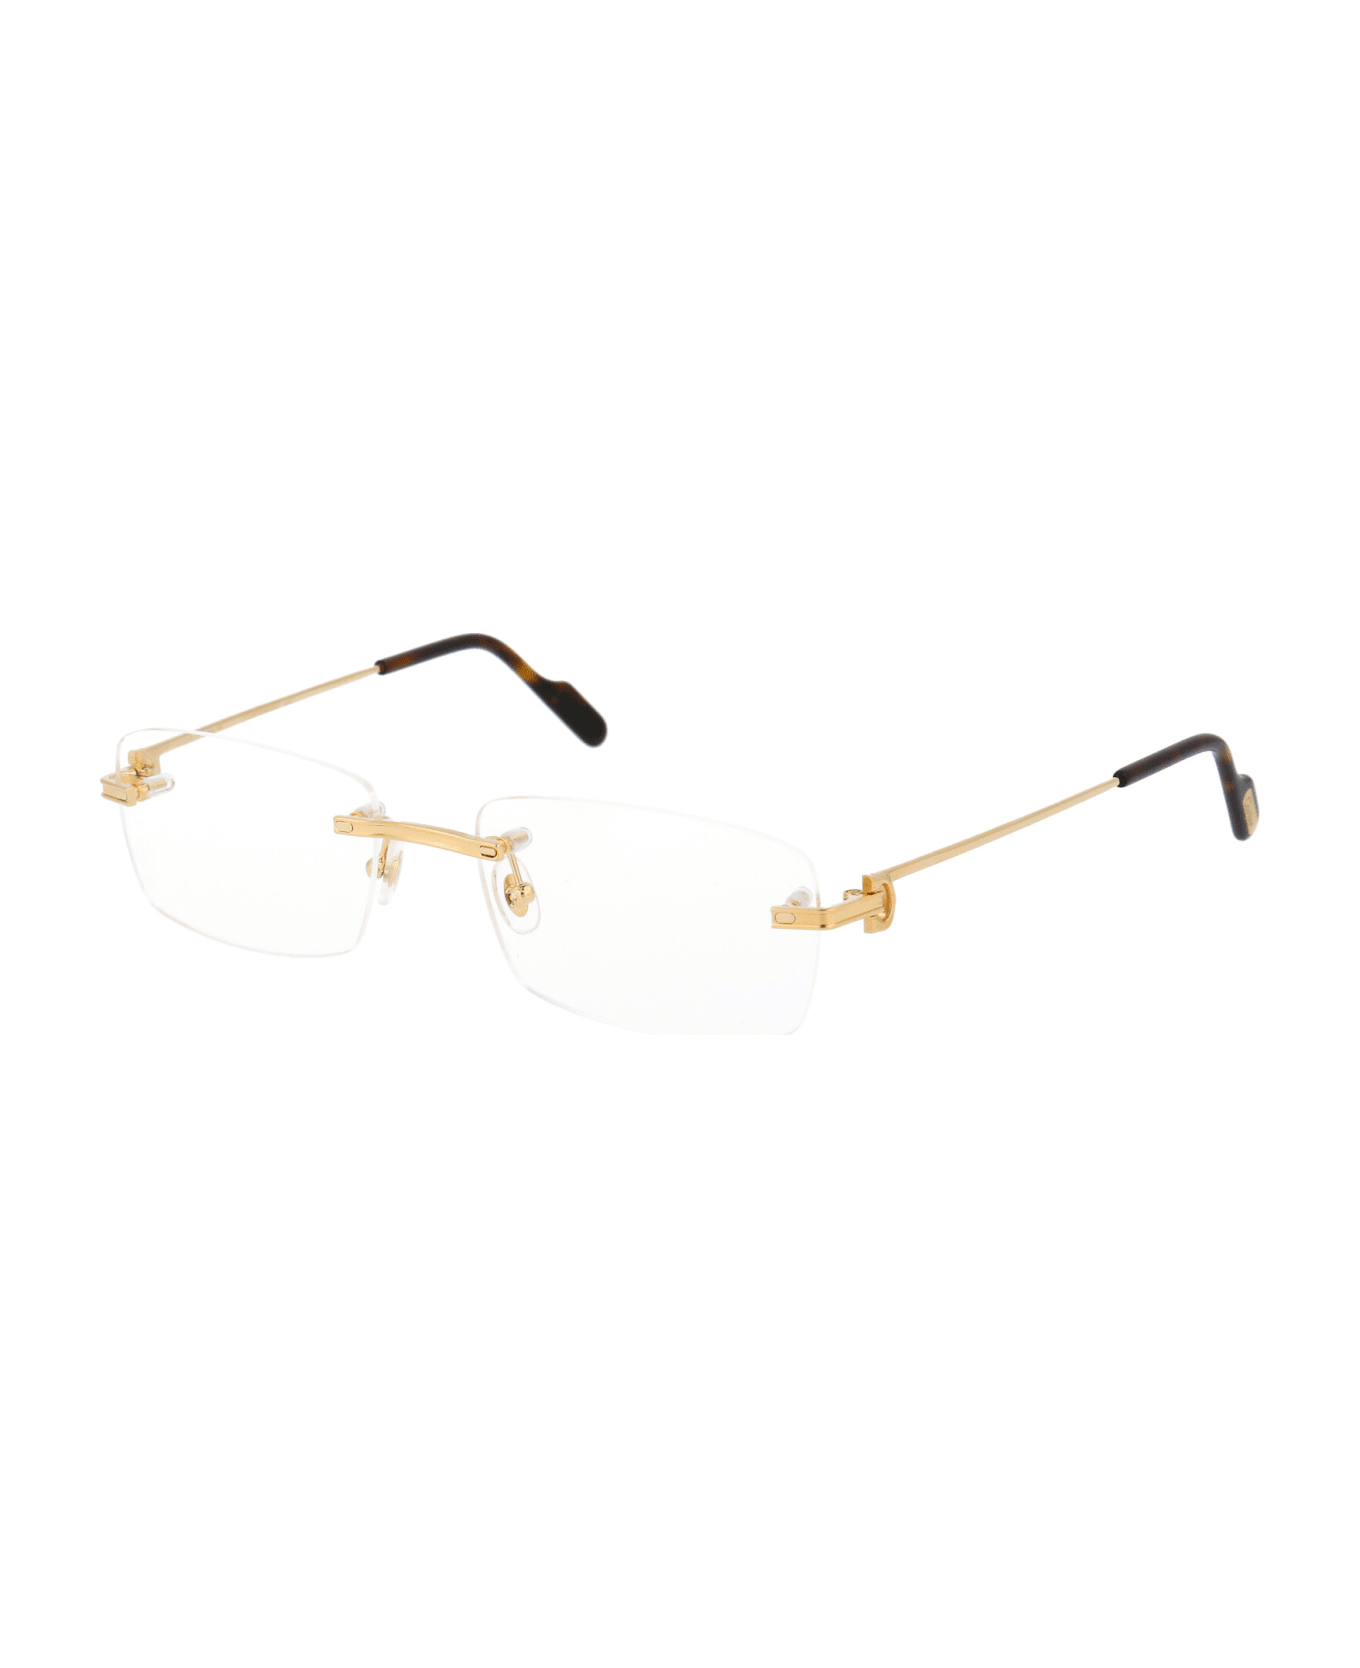 Cartier Eyewear Ct0259o Glasses - 002 GOLD GOLD TRANSPARENT